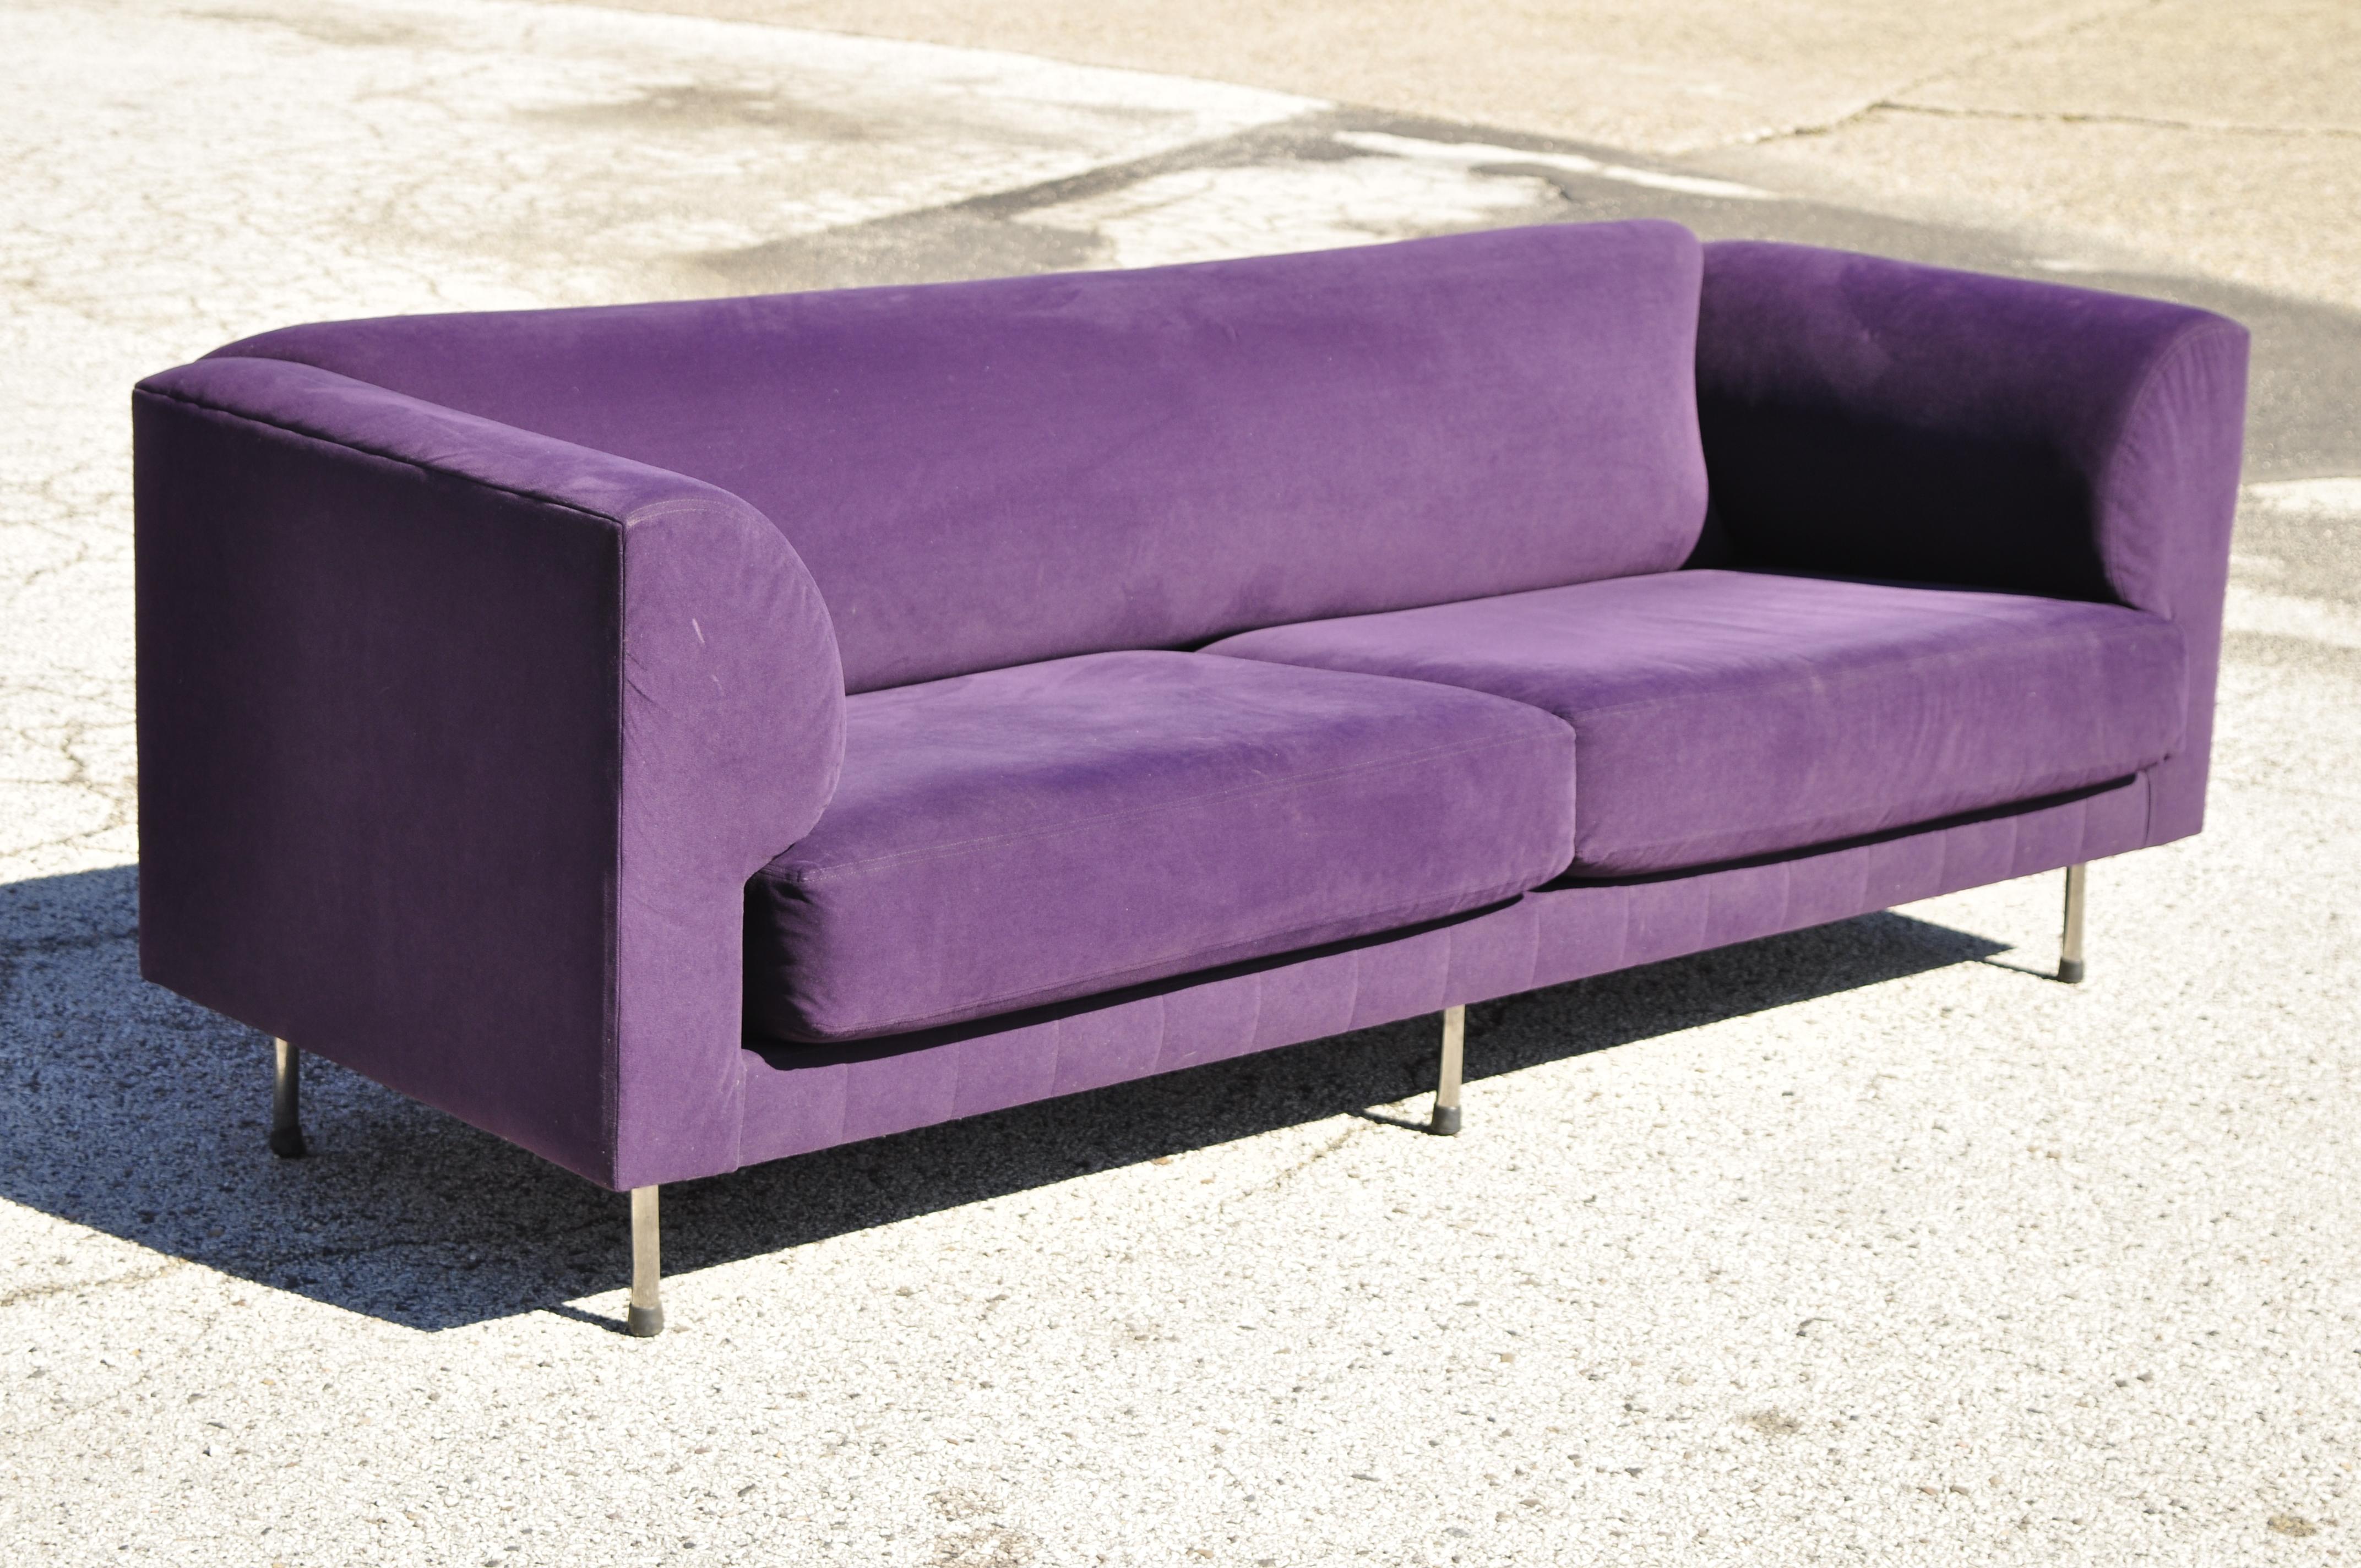 Larry Laslo for Directional purple modern Italian Bauhaus style chrome leg sofa. Listing includes 6 chrome metal legs, purple microfiber upholstery, original label, clean modernist lines, sleek sculptural form, circa late 20th century. Measurements: